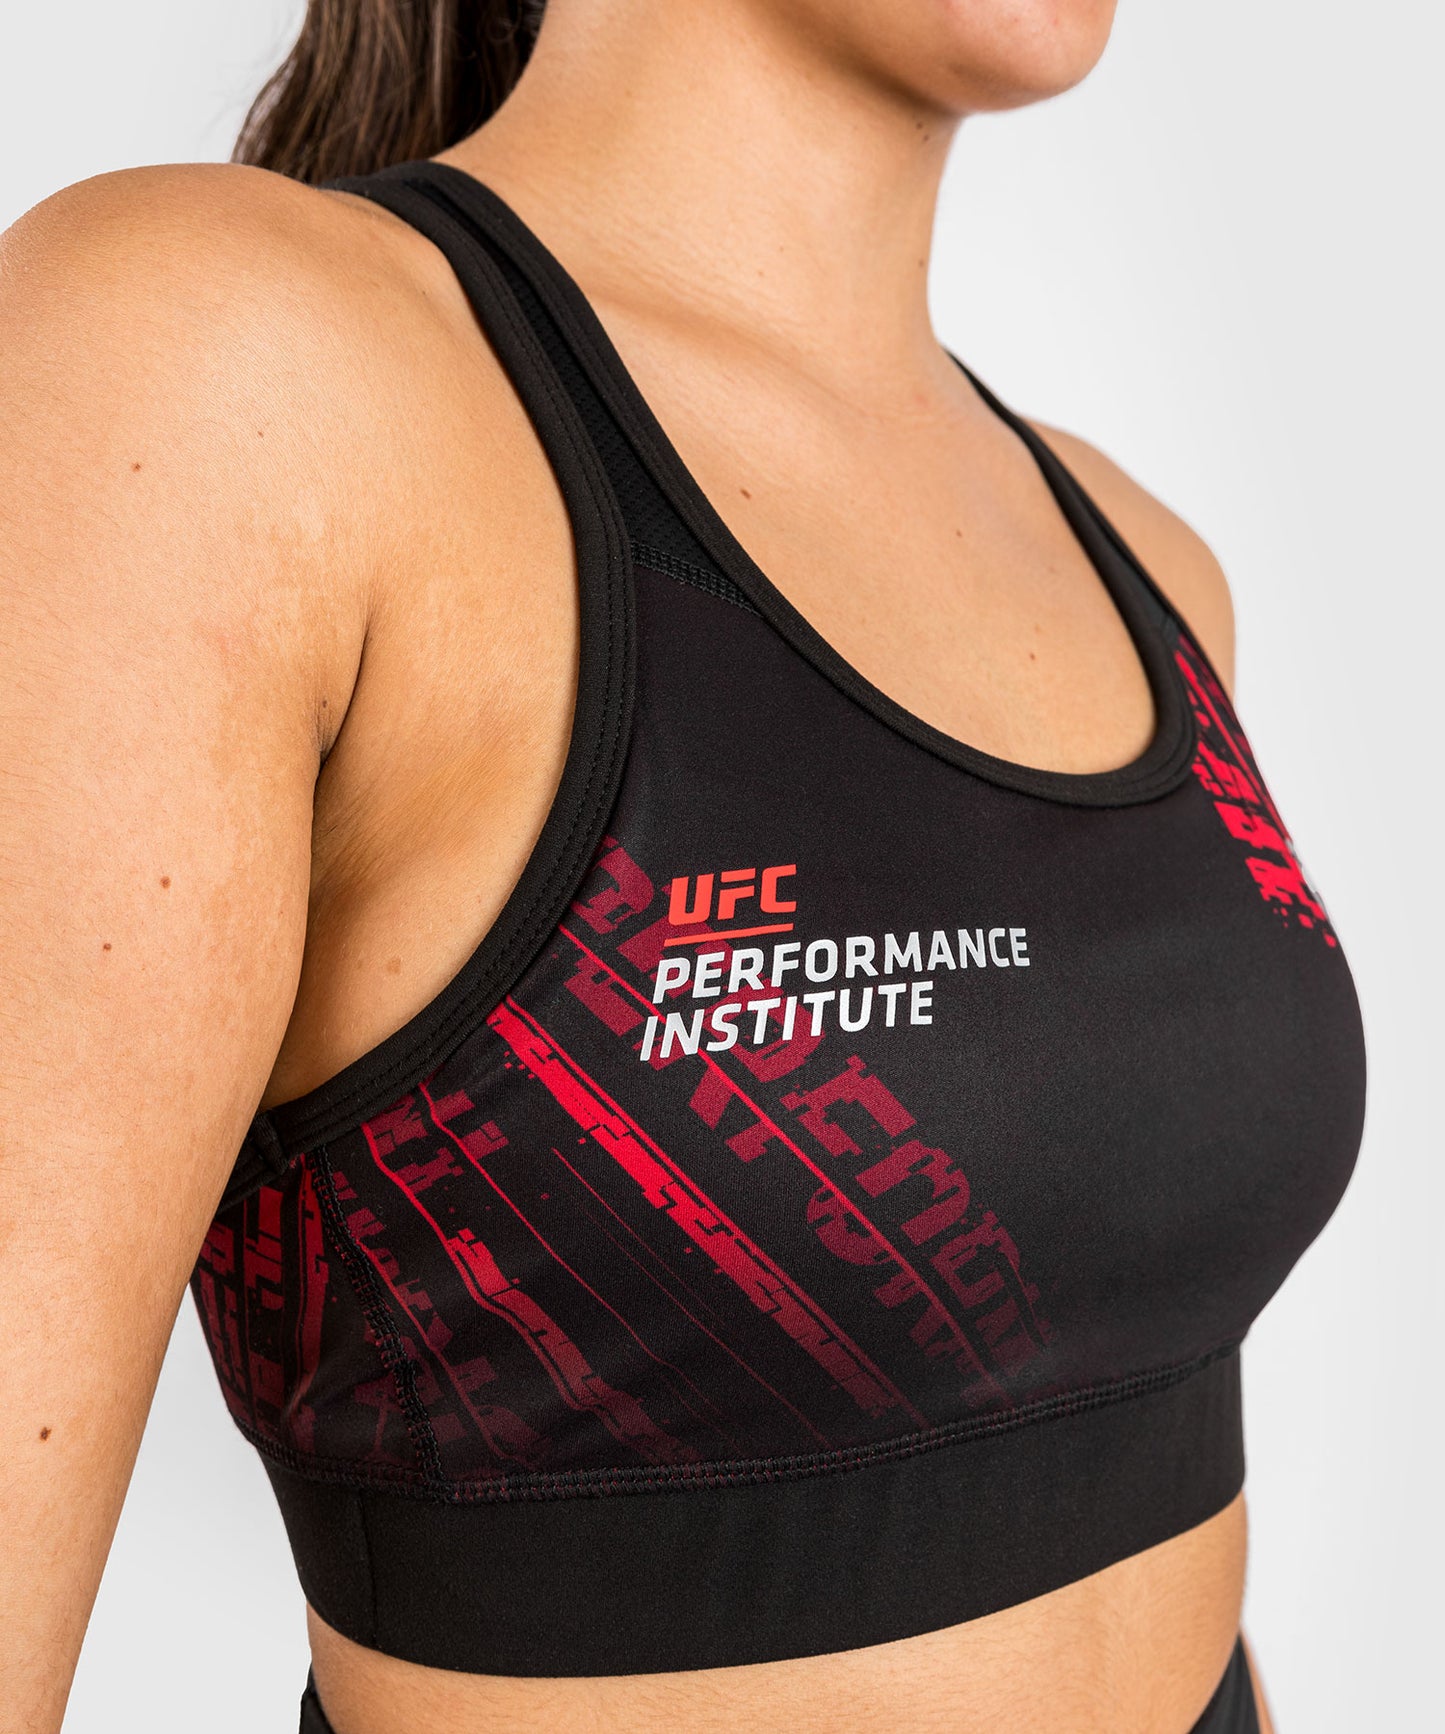 UFC Performance Institute 2.0 Women’s Sport Bra - Black/Red